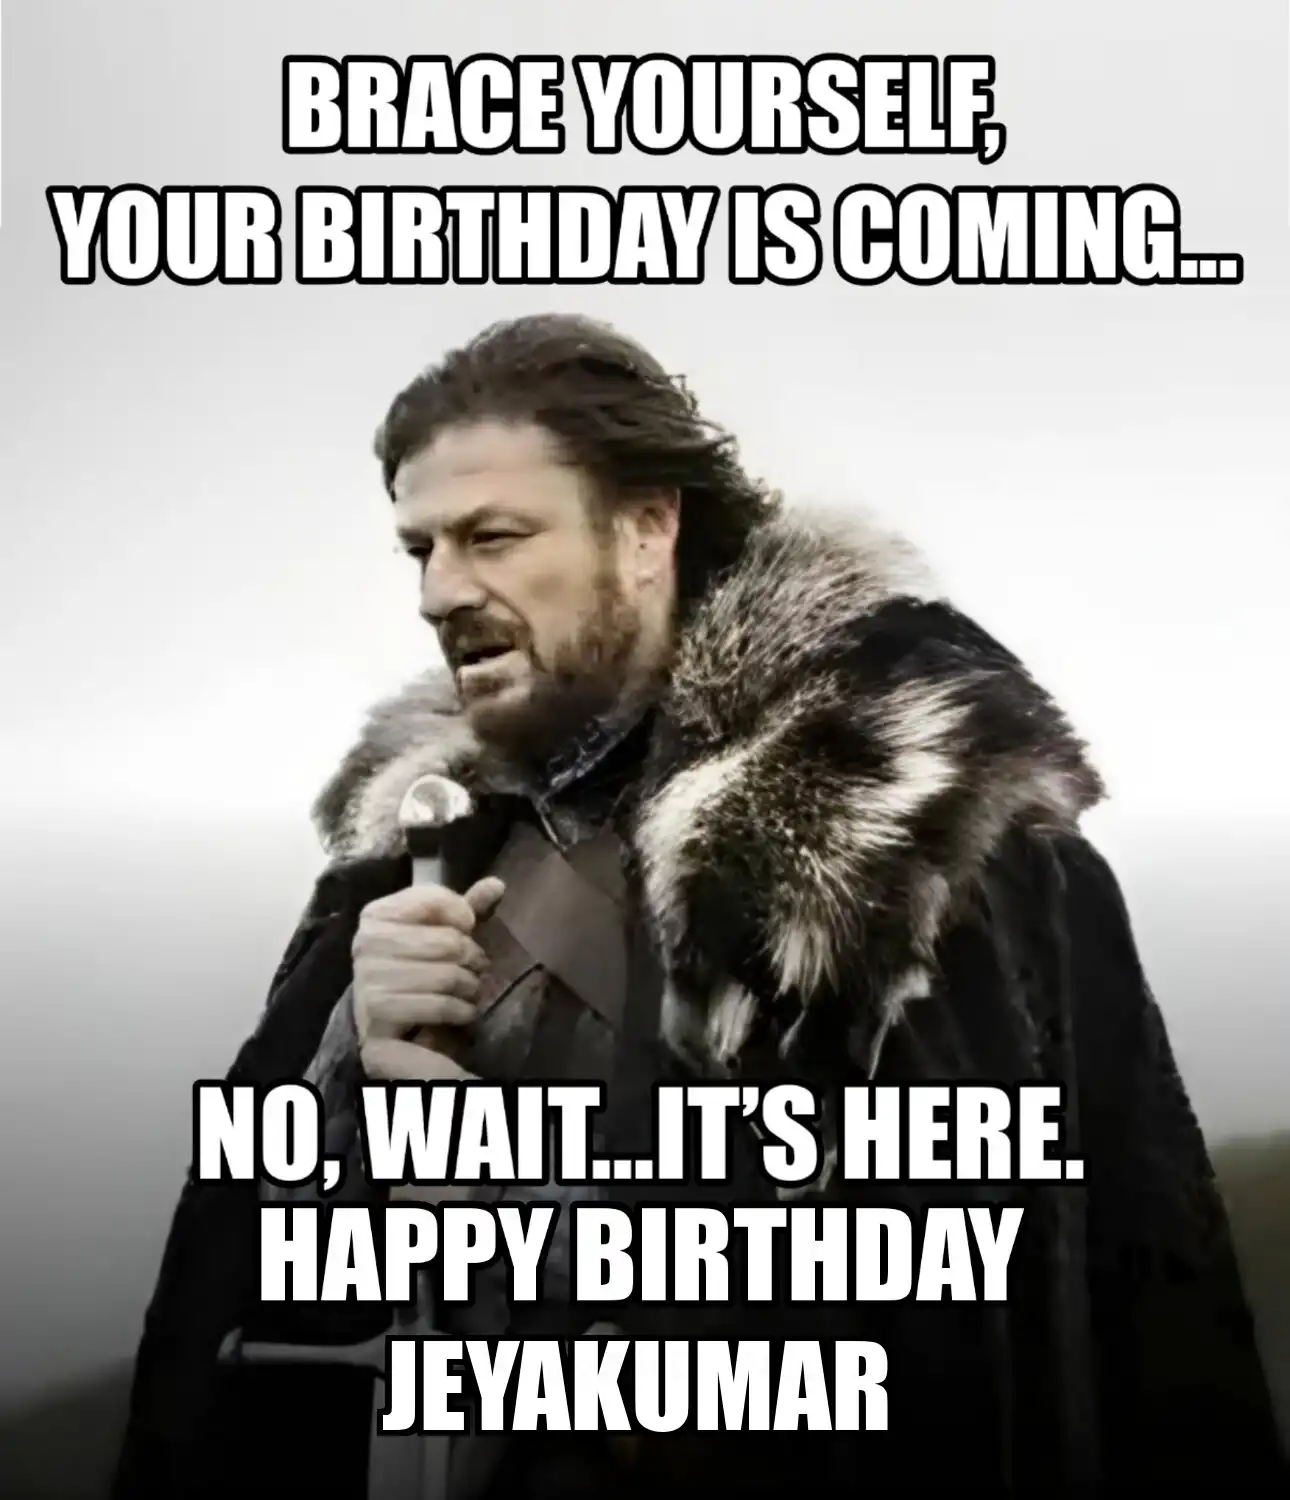 Happy Birthday Jeyakumar Brace Yourself Your Birthday Is Coming Meme